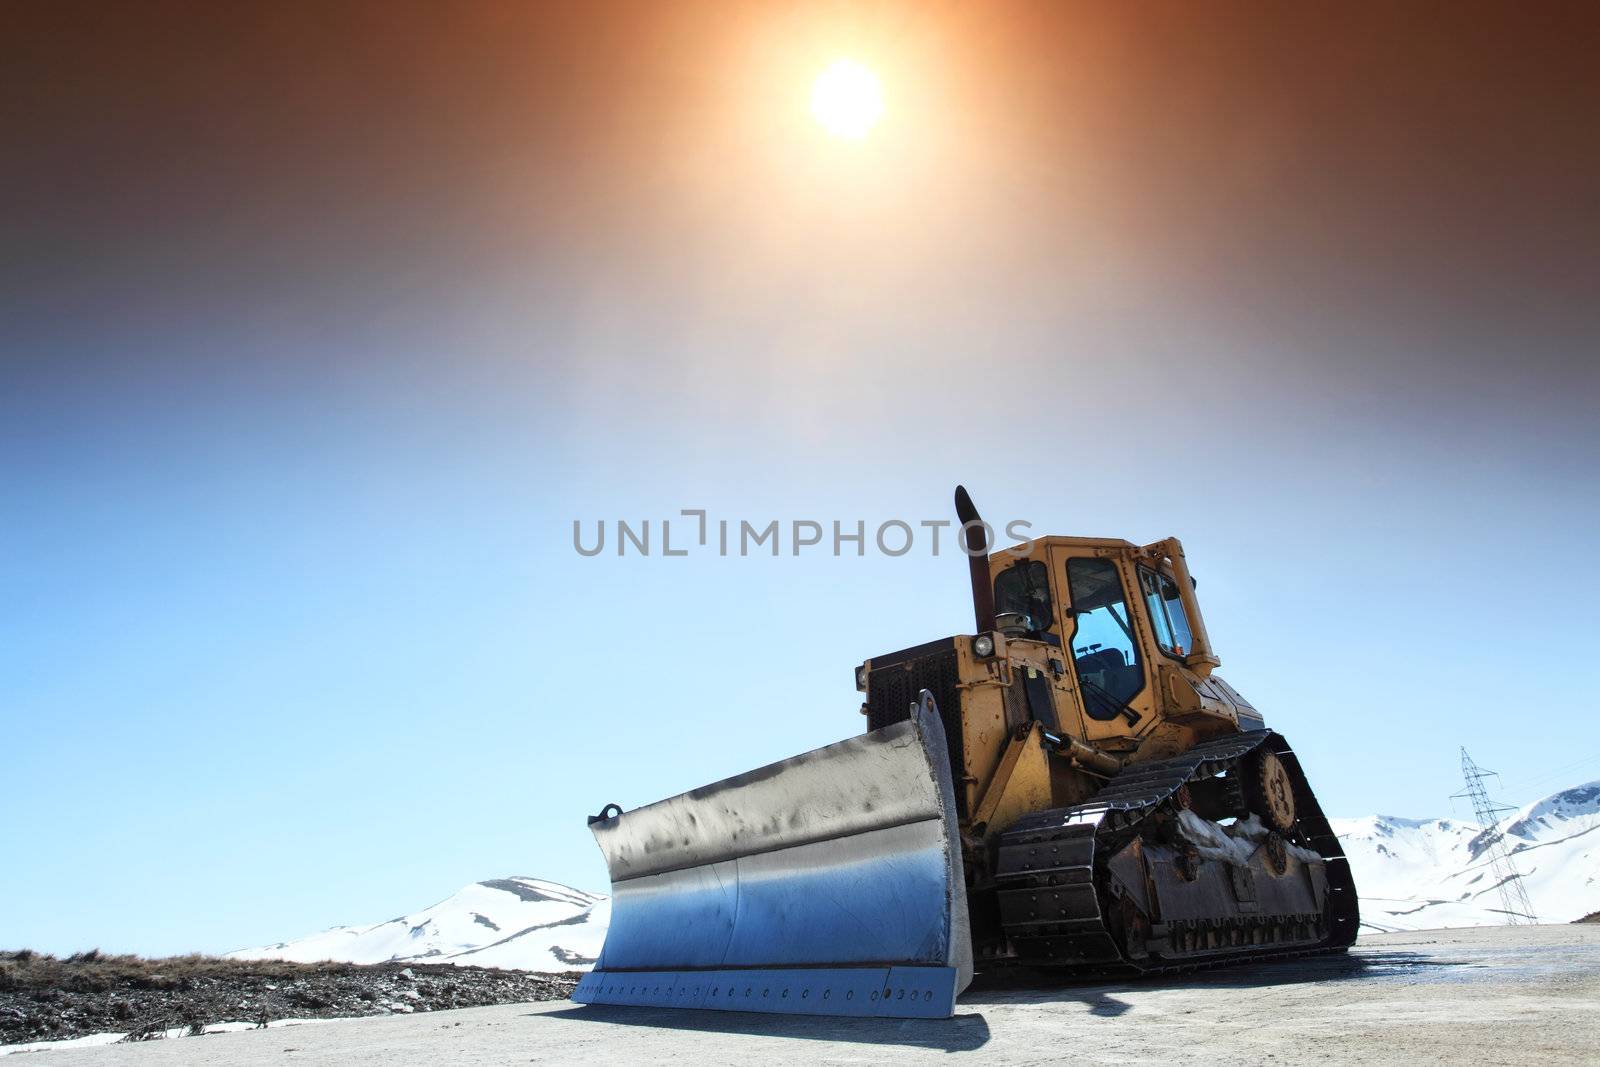 snow-cleaning bulldozer by kokimk